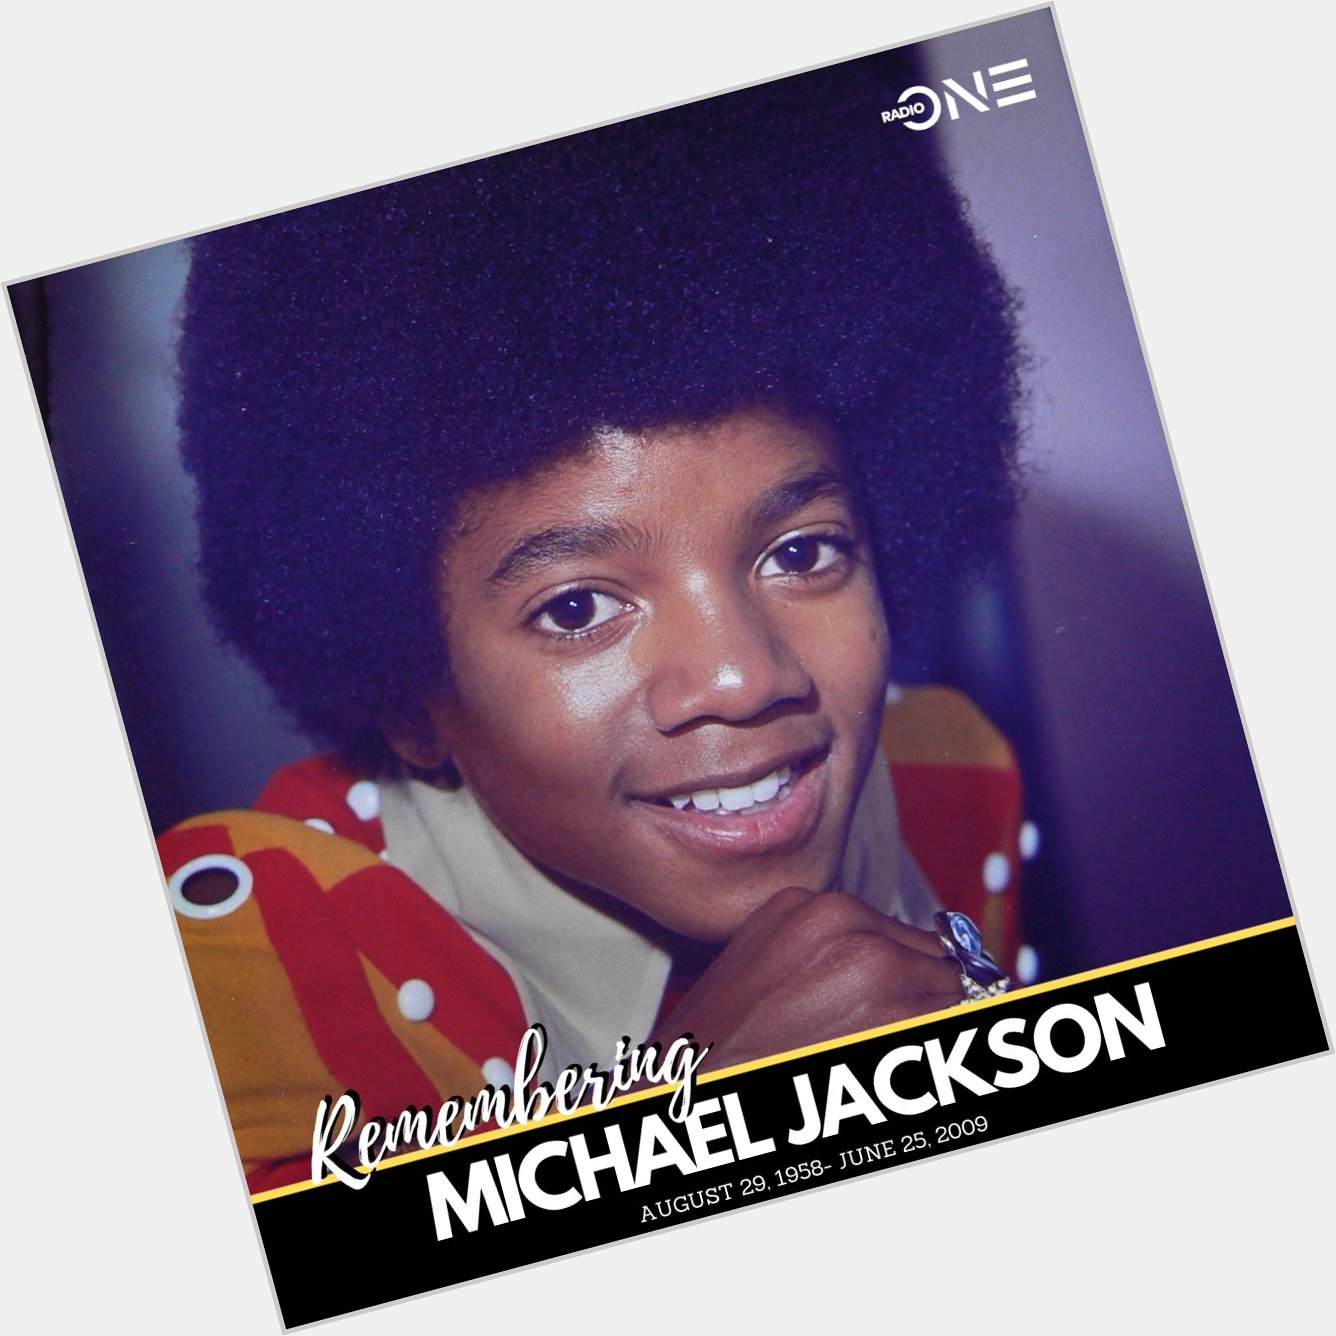 Happy heavenly birthday to the King of Pop, Michael Jackson!  